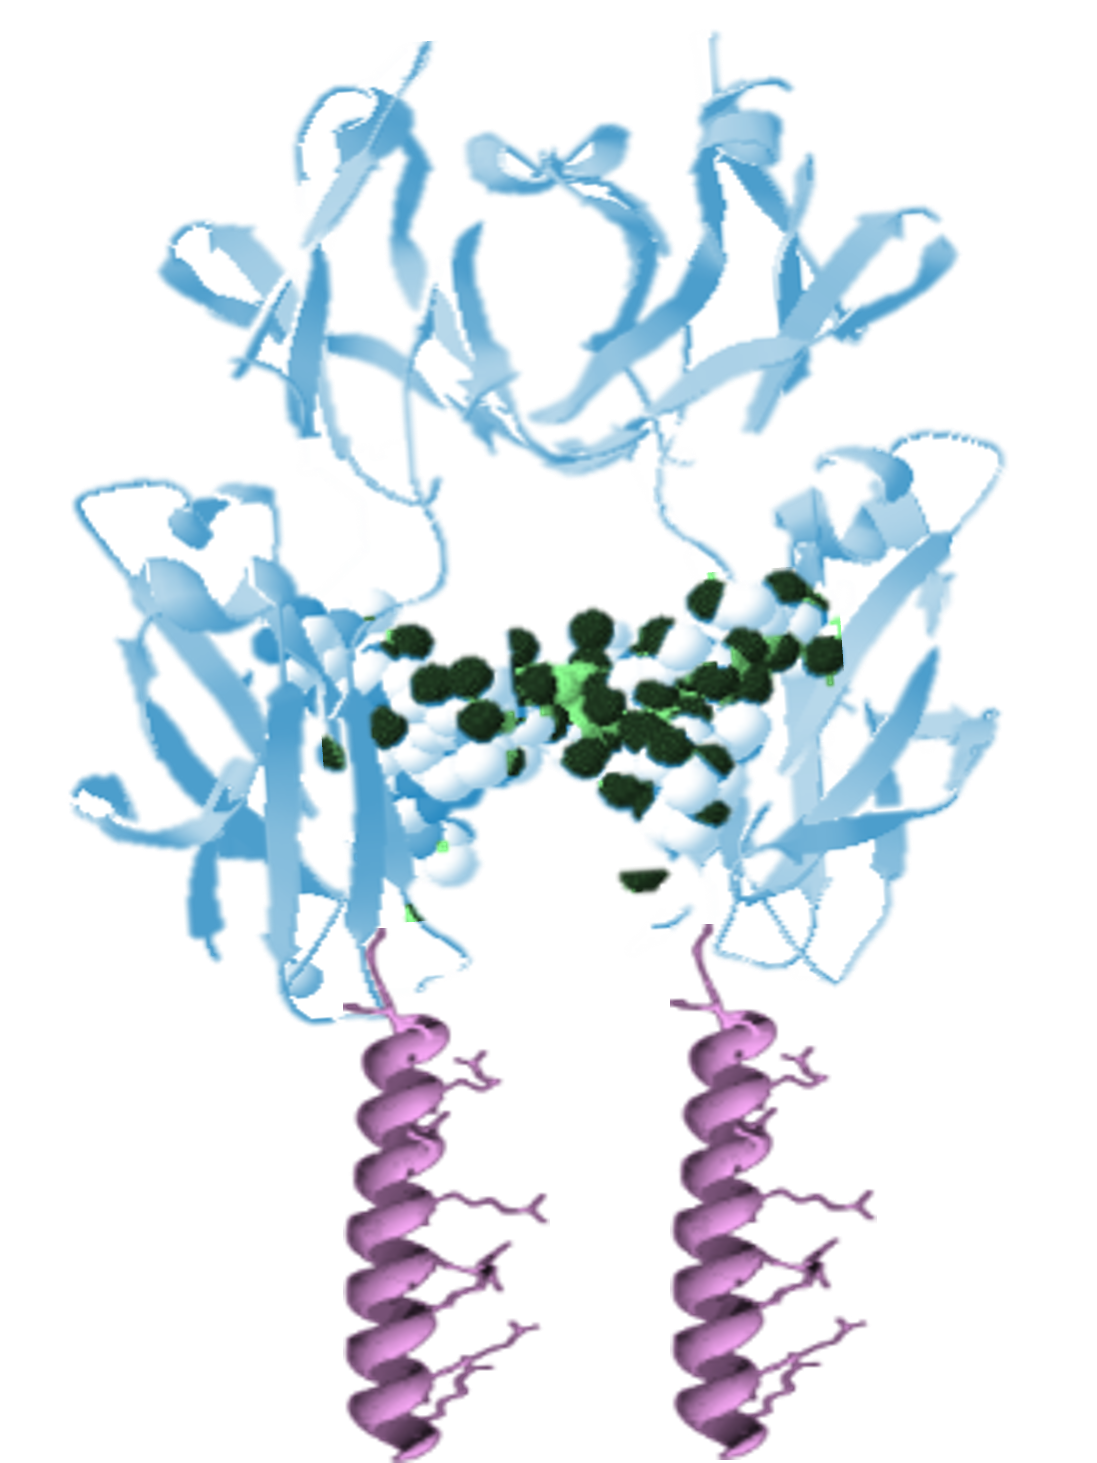 AT-04 peptide-Fc fusion